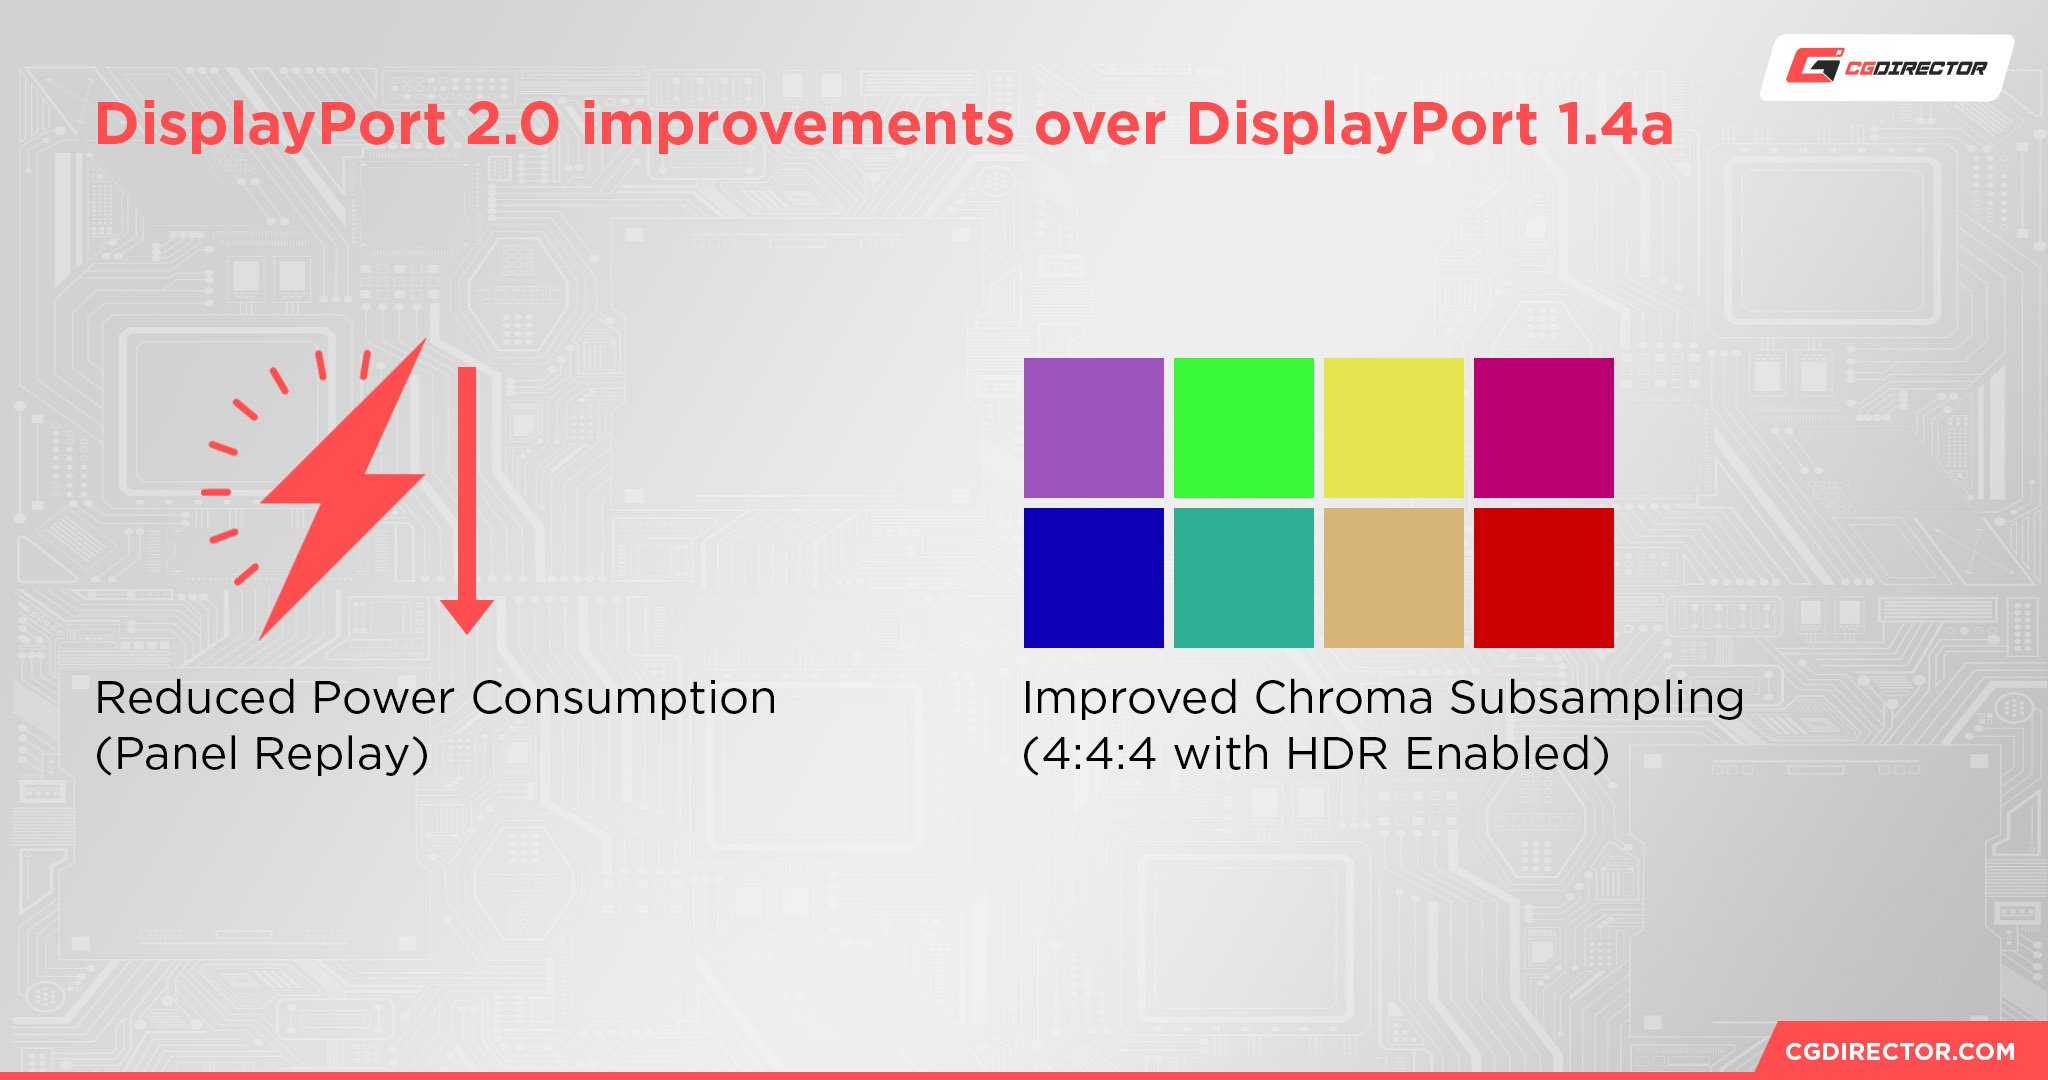 DisplayPort 2.0 improvements over DisplayPort 1.4a